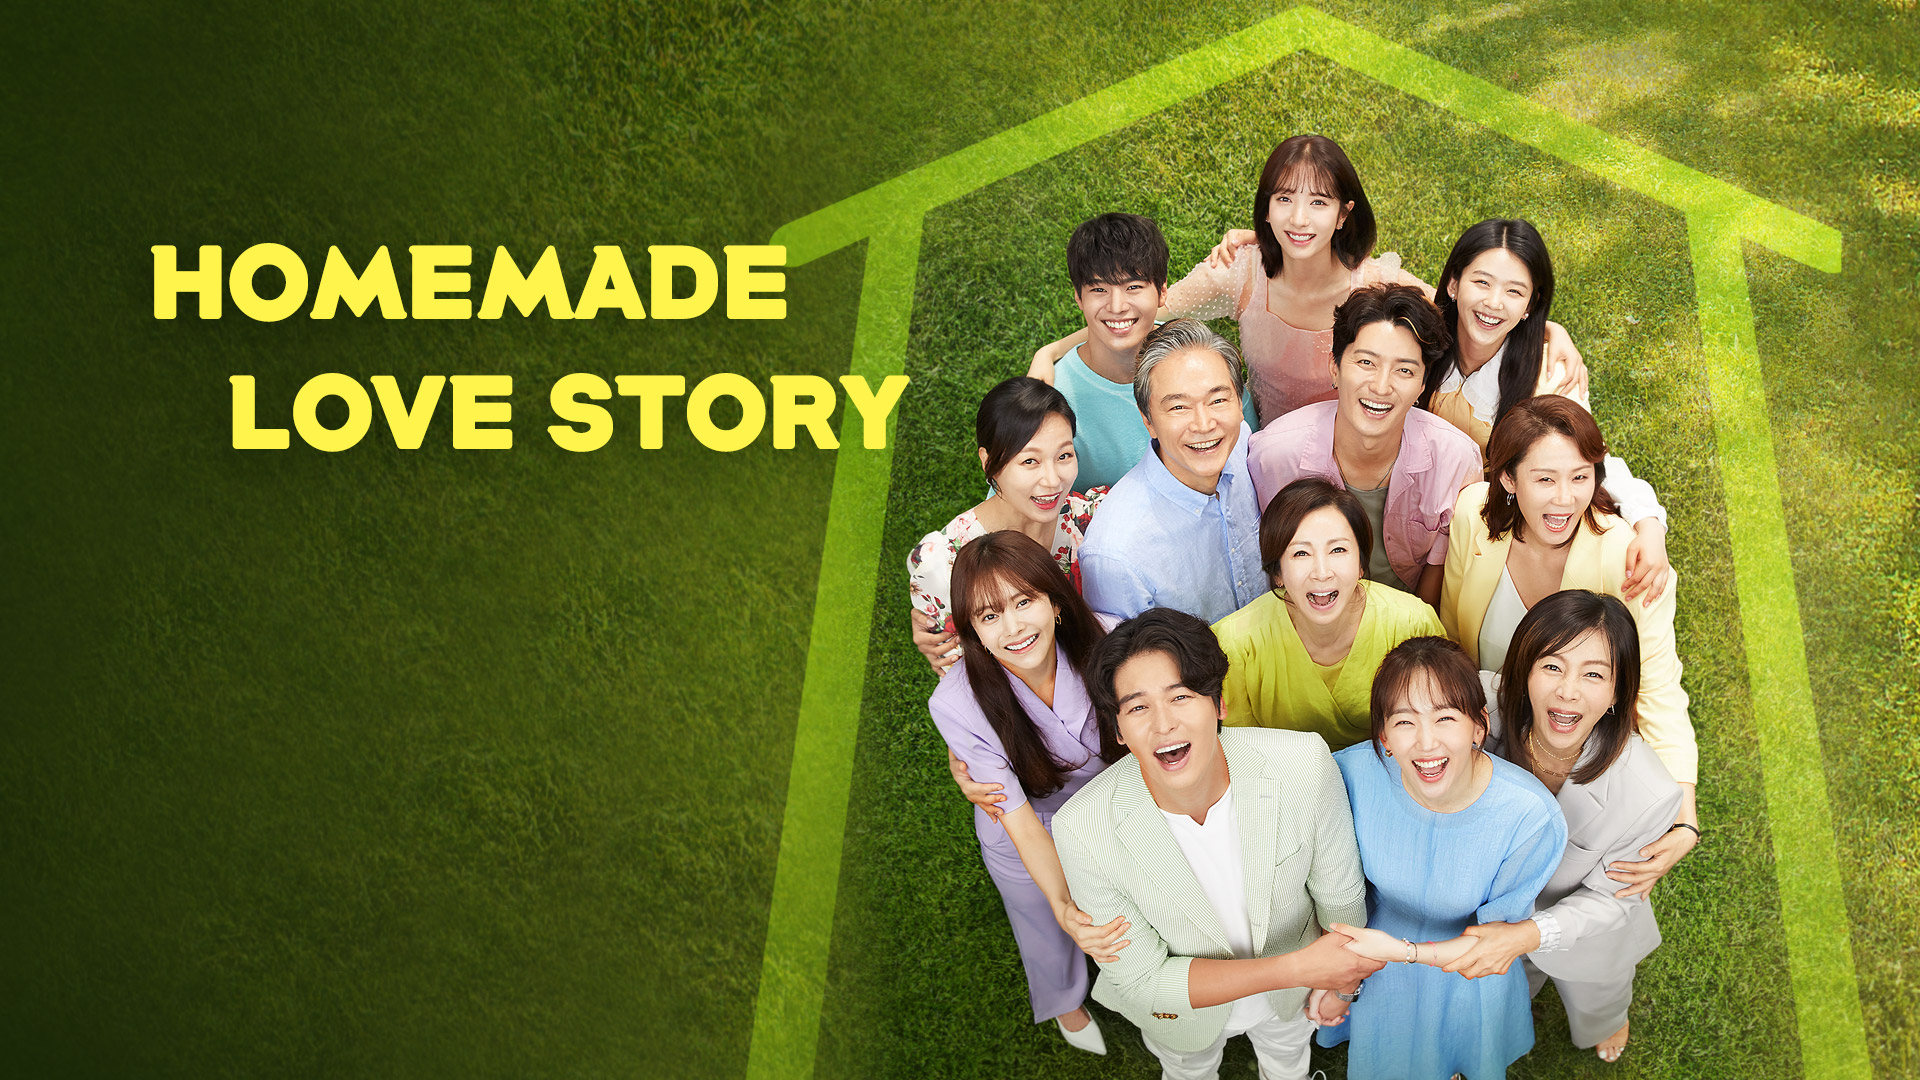 دانلود سریال کره‌ای Homemade love story